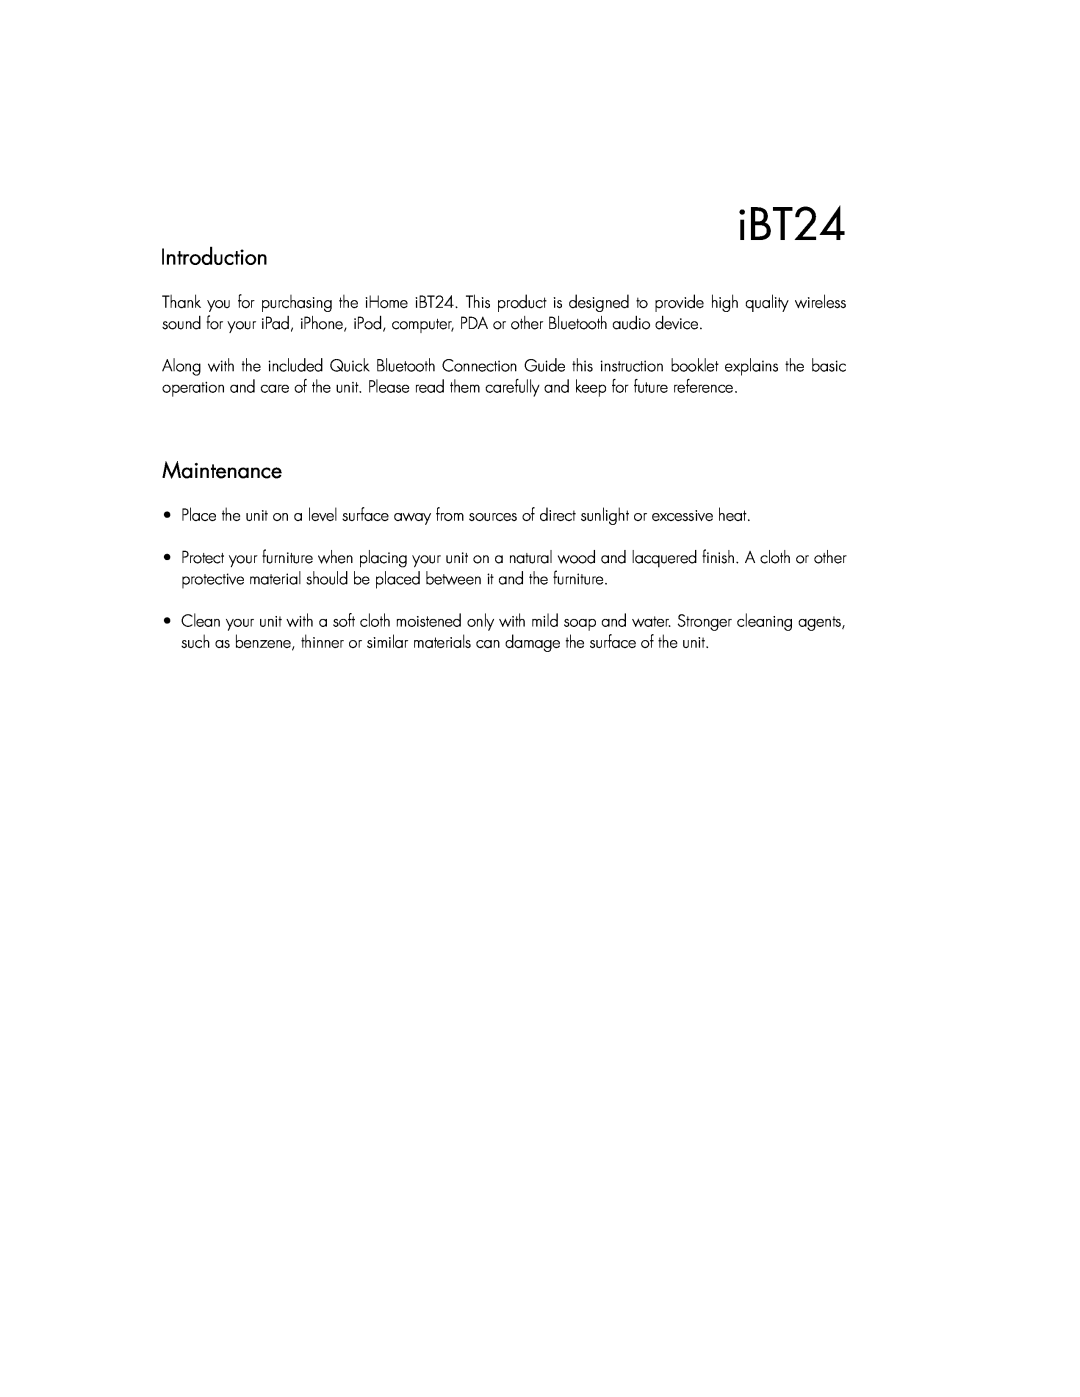 iHome IBT24GC, IBT24UC instruction manual iBT24, Introduction, Maintenance 